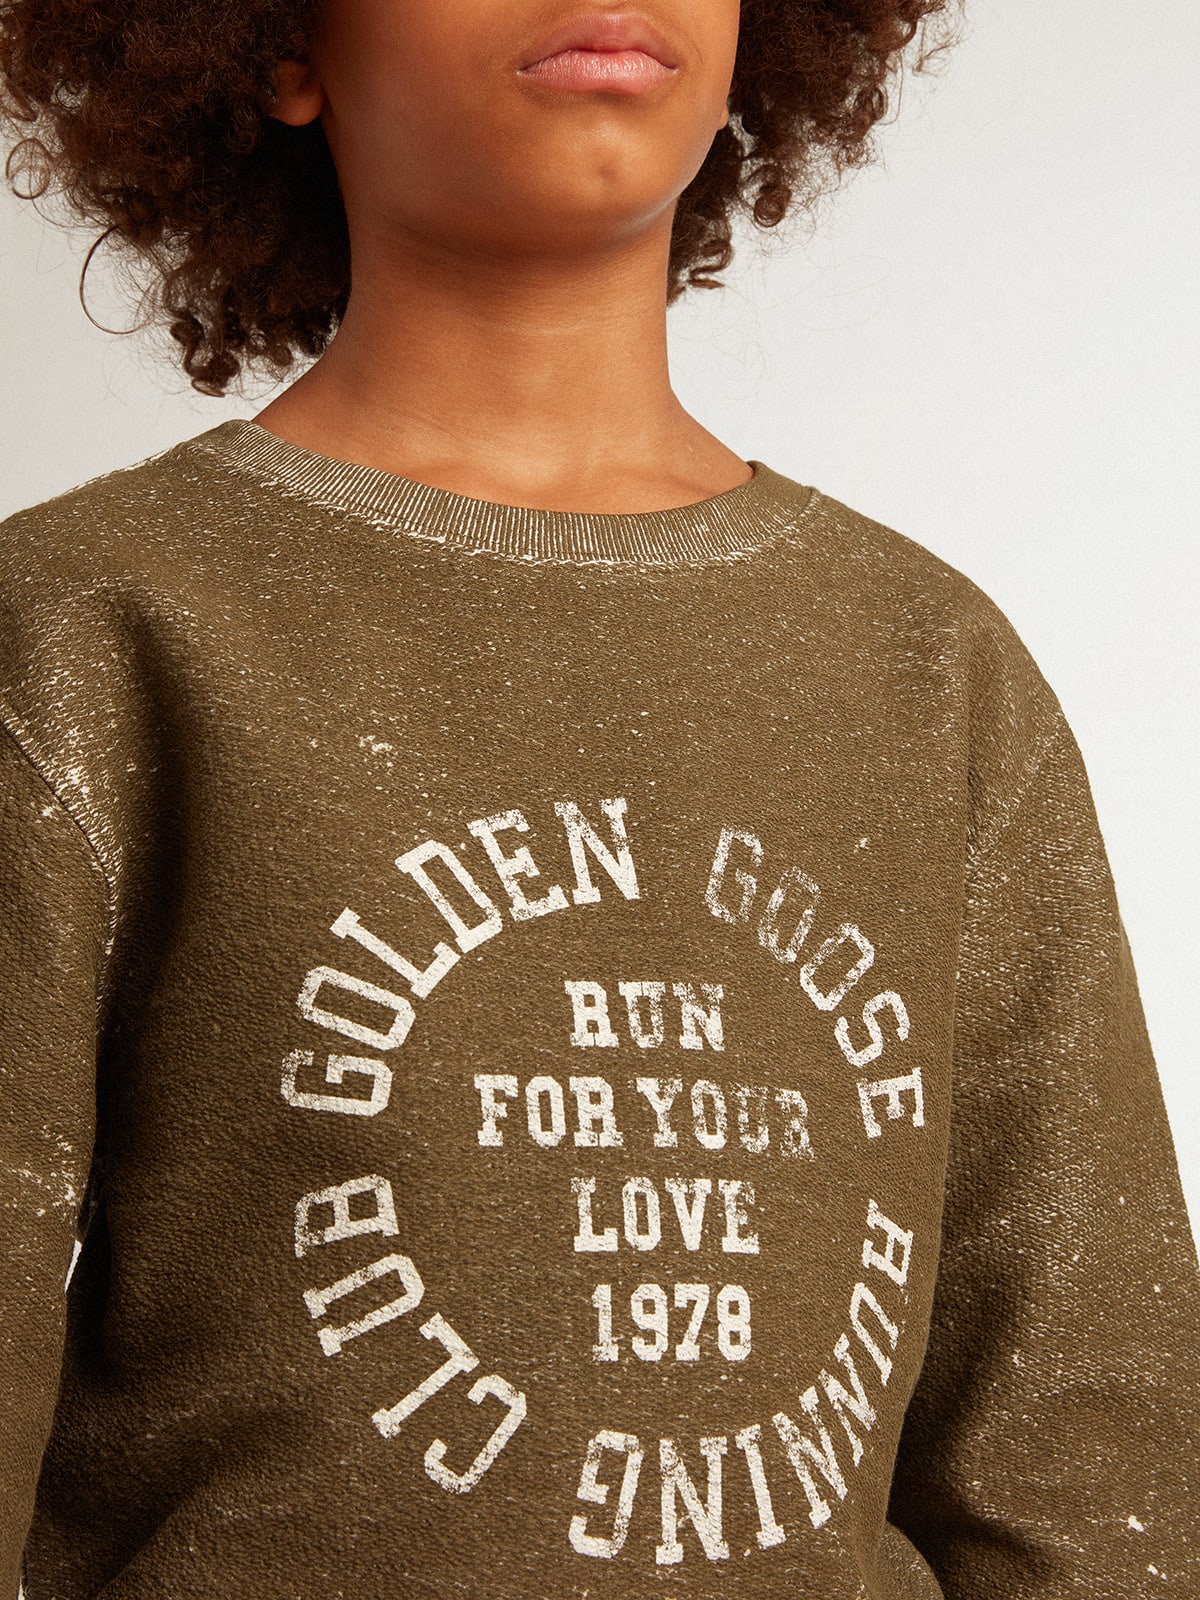 Golden Goose - Boys’ vintage-effect beech-colored cotton sweatshirt in 